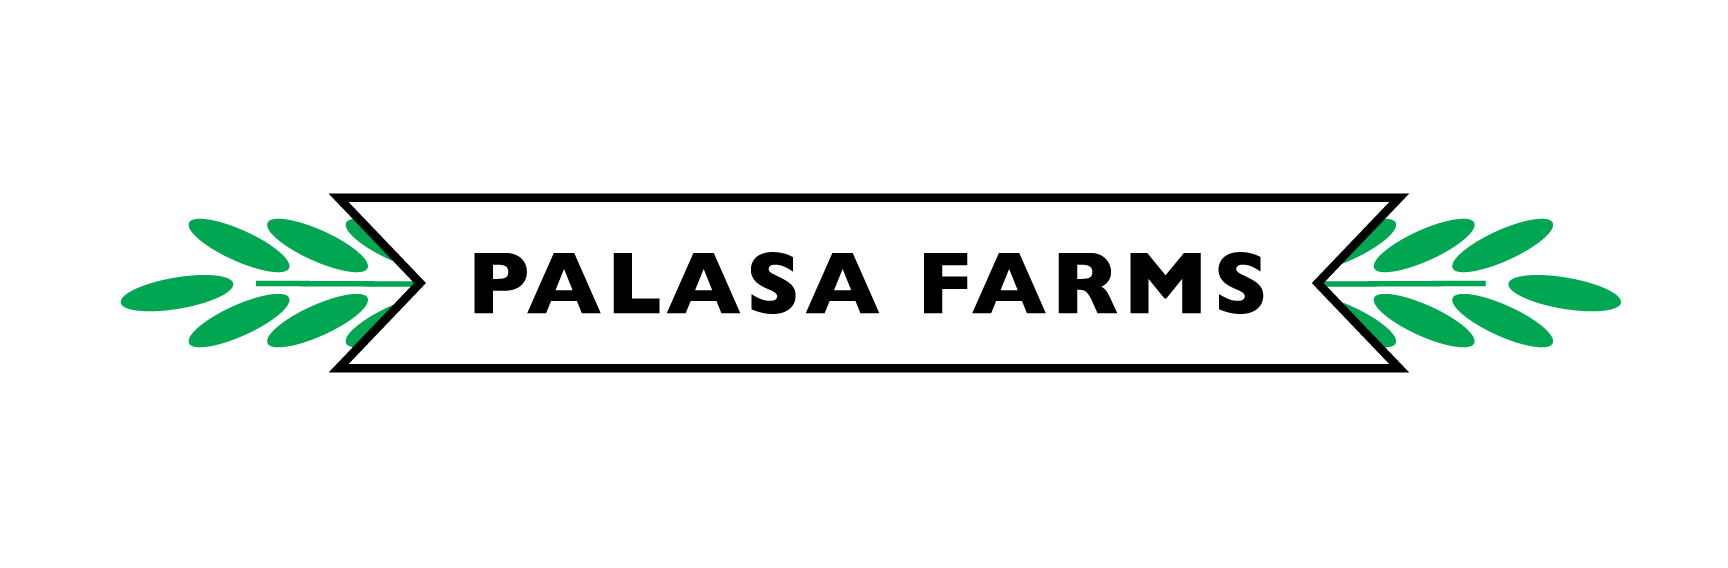 Palasa Farms - Farmside